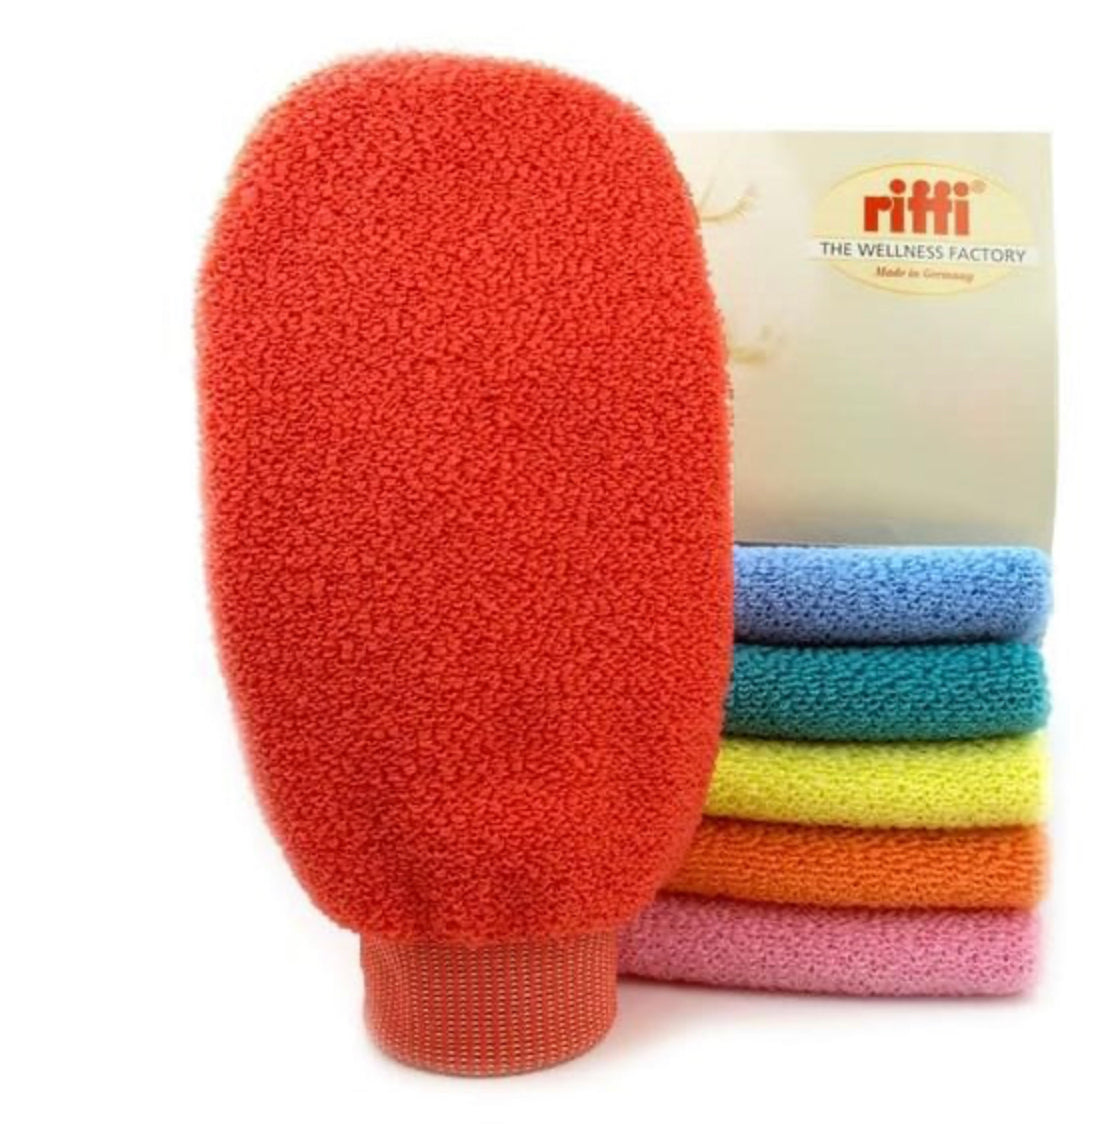 Riffi Massage Glove – Original